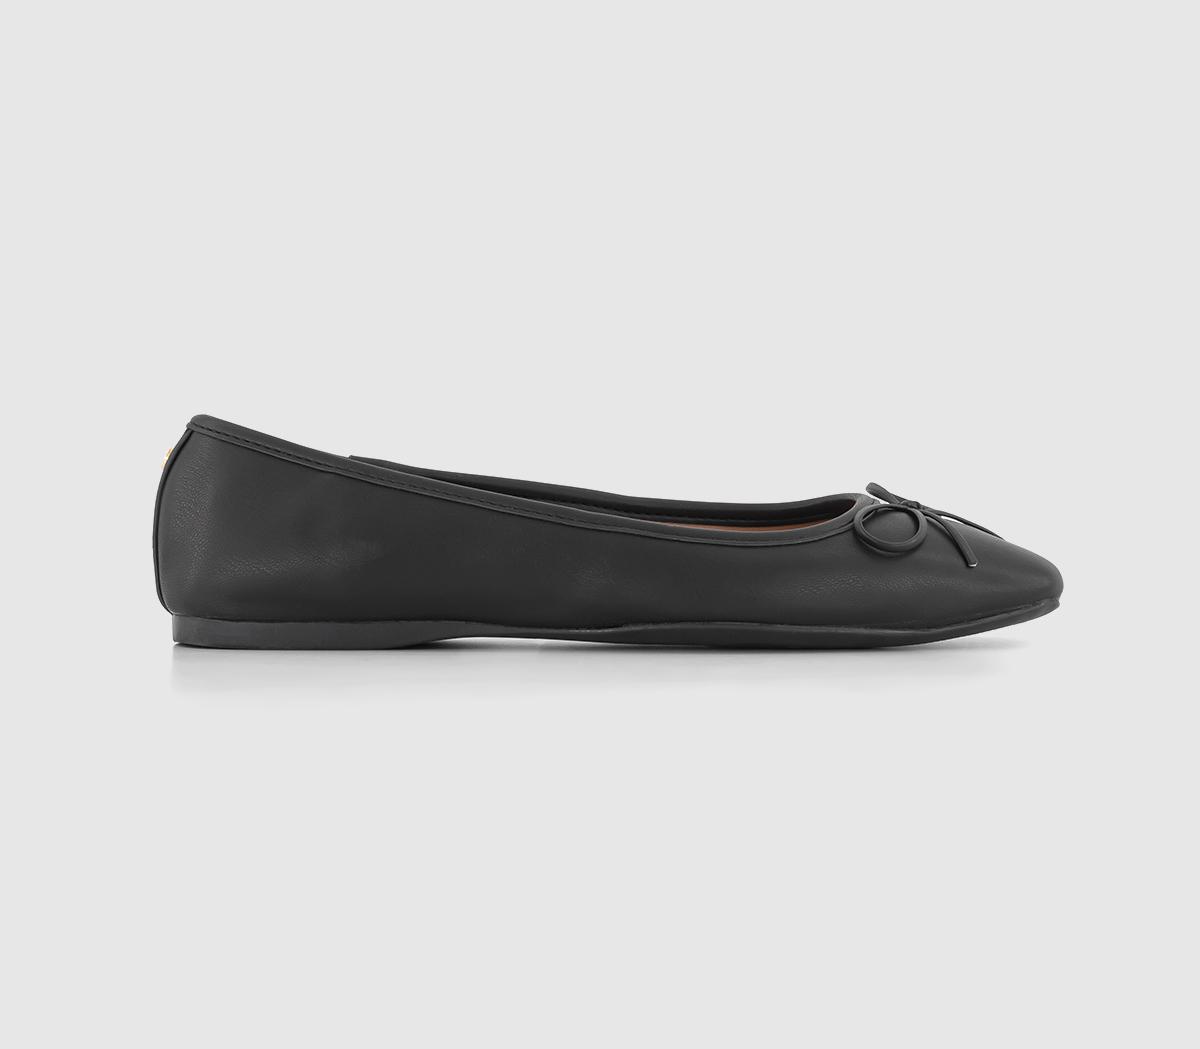 OFFICEFive Star Square Toe Ballerina Shoes Black